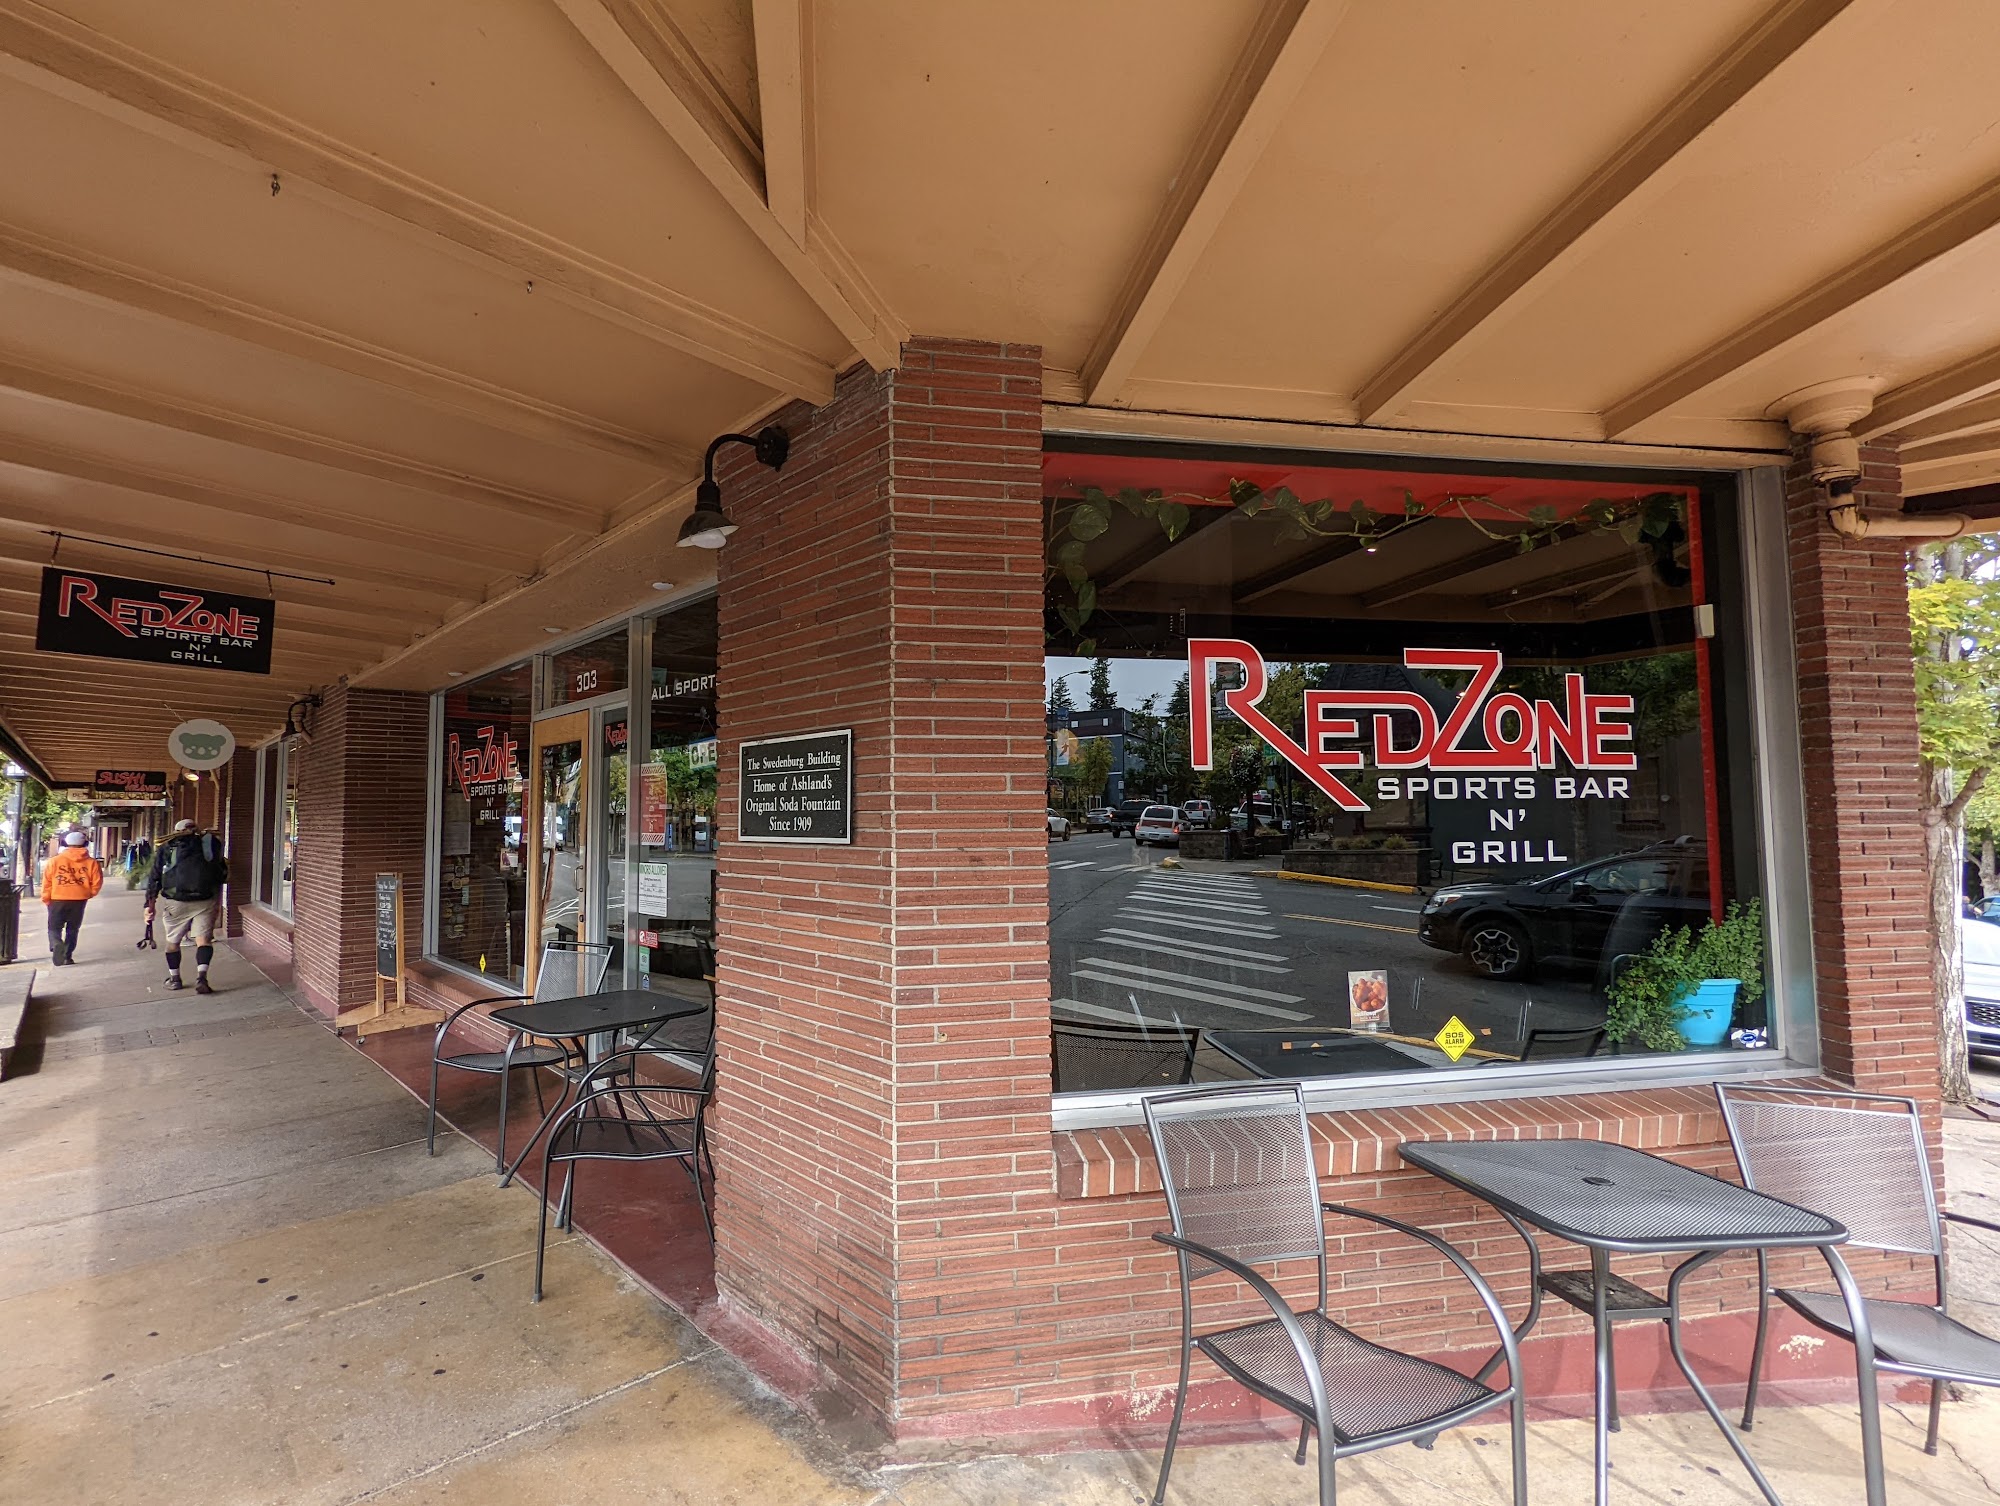 RedZone Sports Bar N' Grill